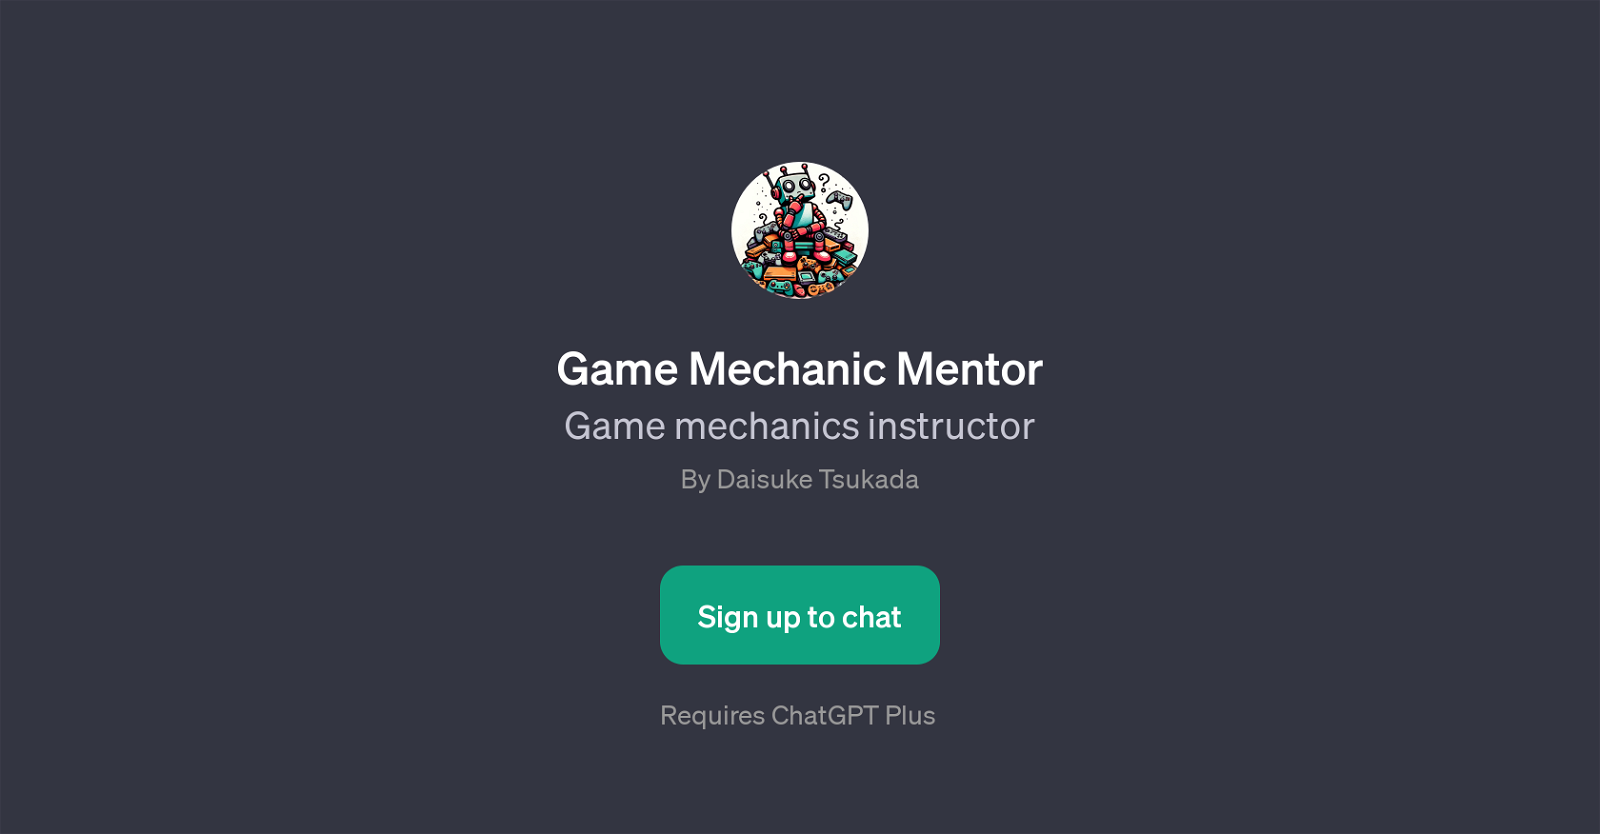 Game Mechanic Mentor website